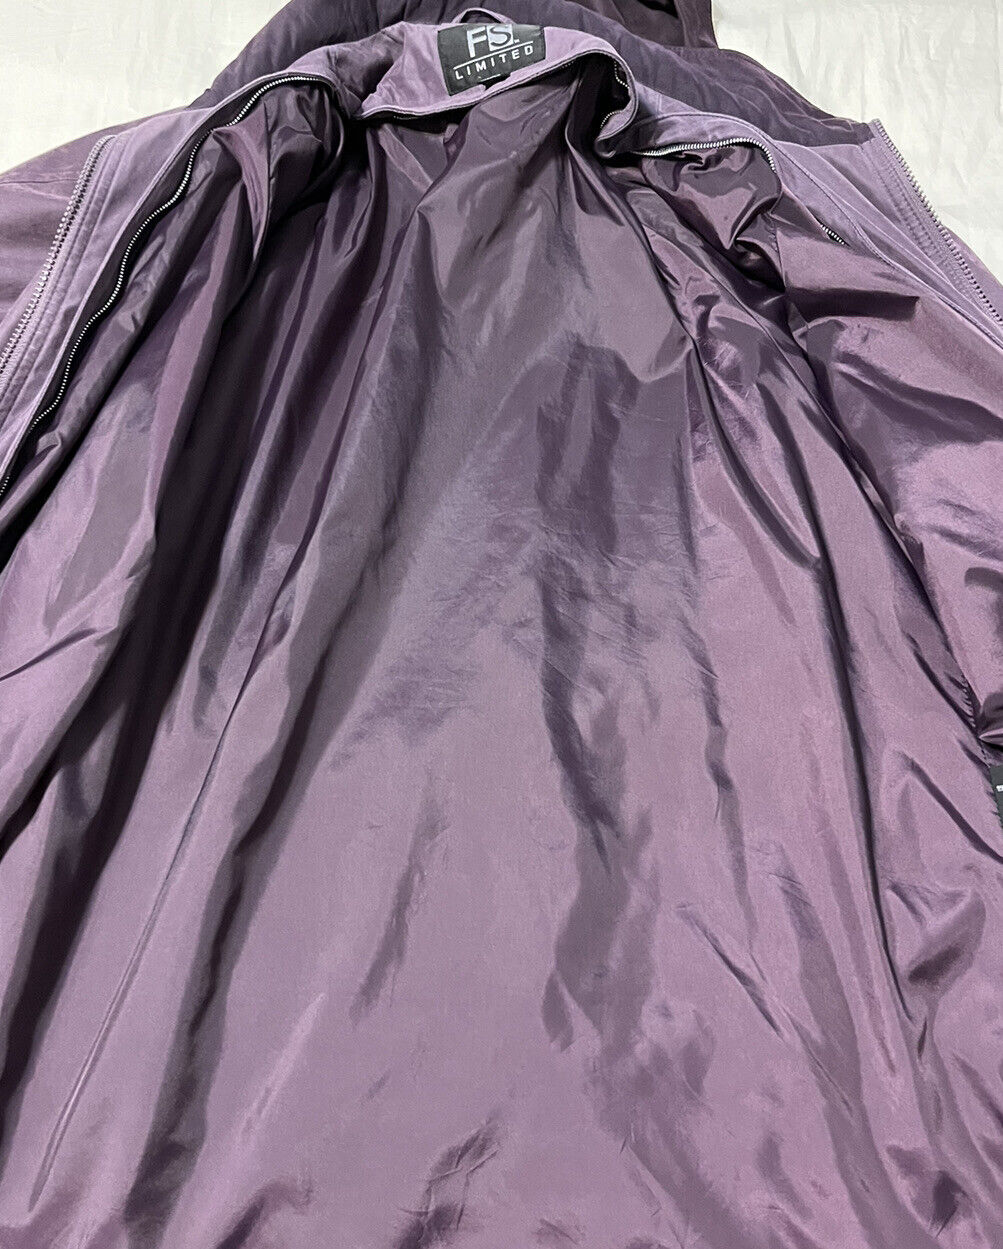 FS Limited Microfiber Jacket Coat Purple Zip Togg… - image 7